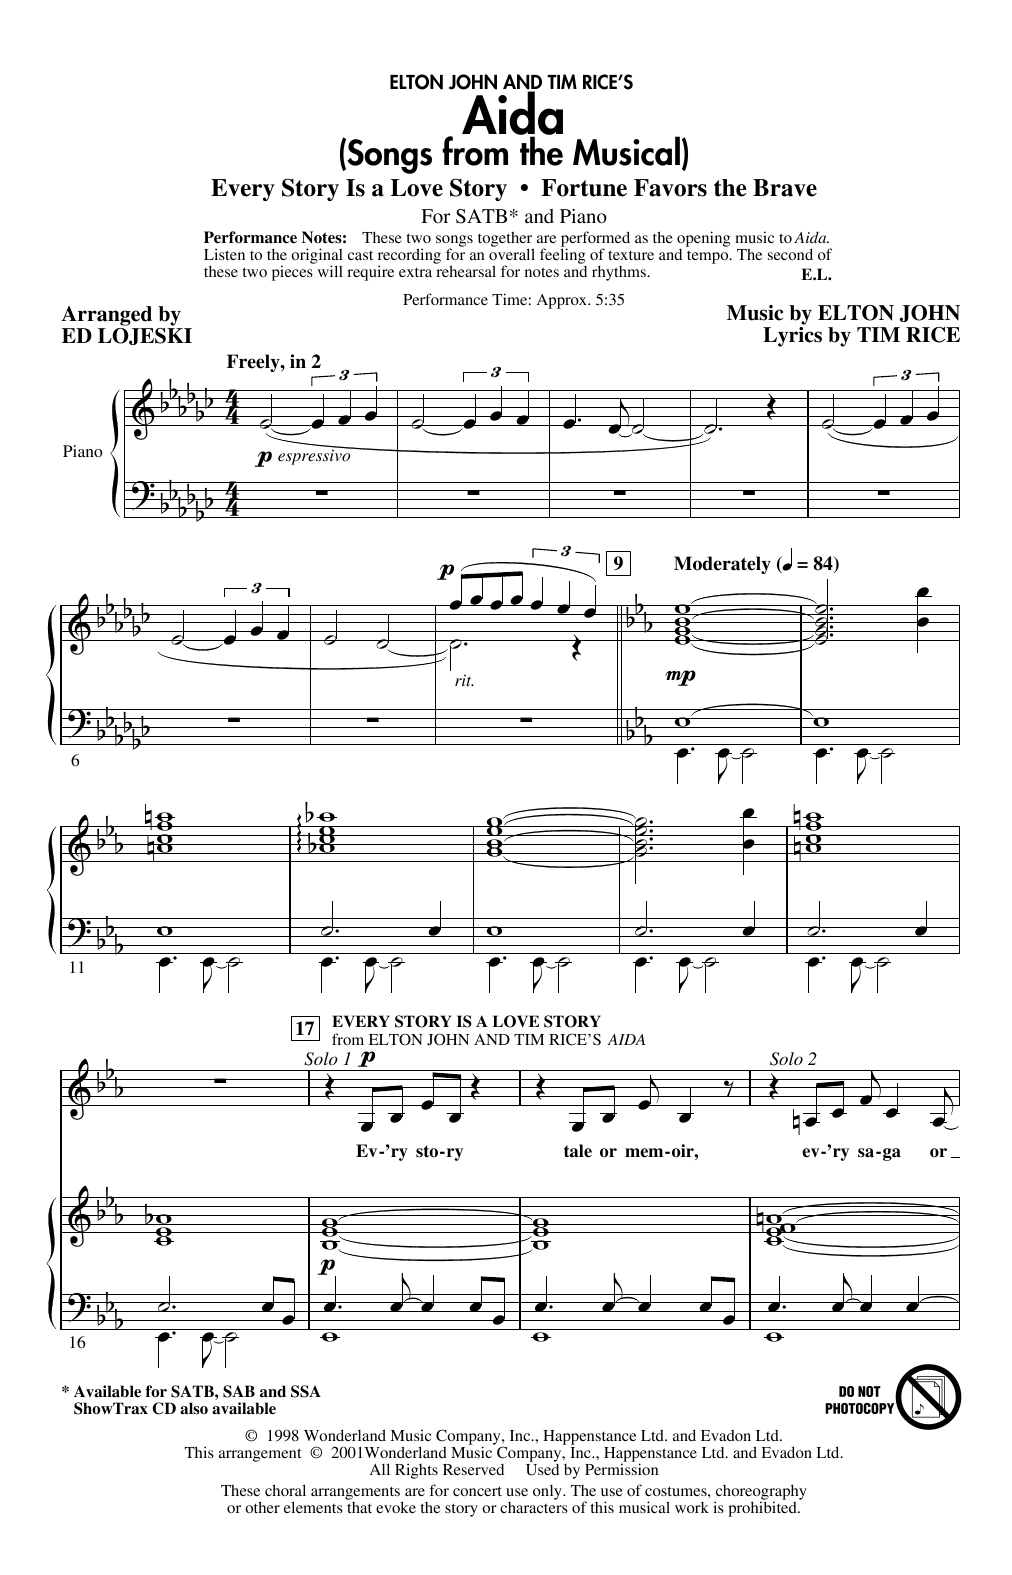 Elton John & Tim Rice Aida (Songs from the Musical) (arr. Ed Lojeski) sheet music notes and chords arranged for SATB Choir